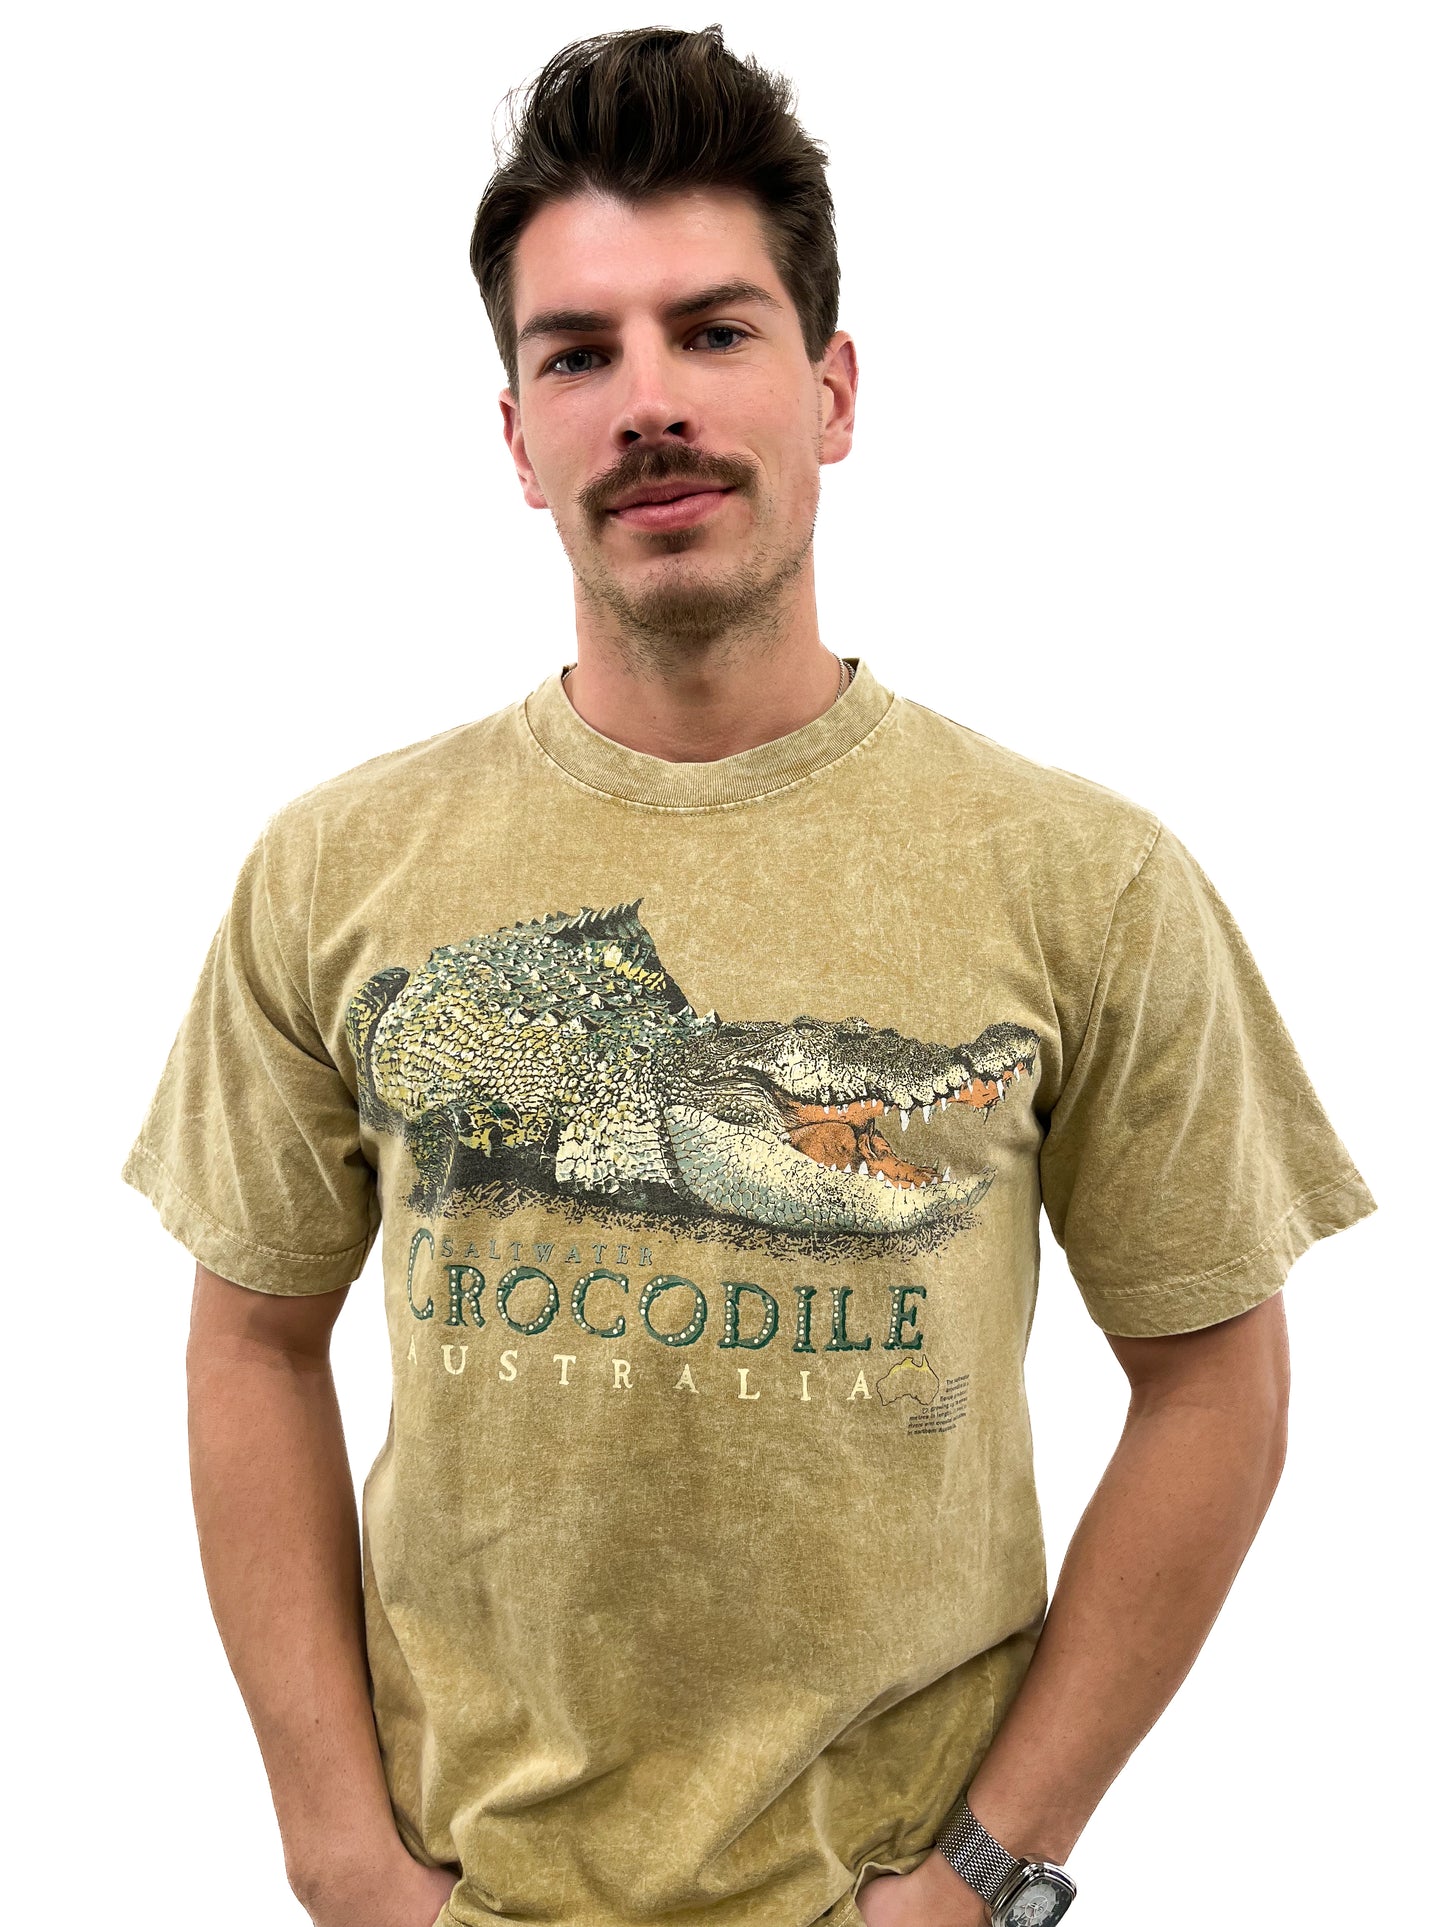 90s Crocodile Tee